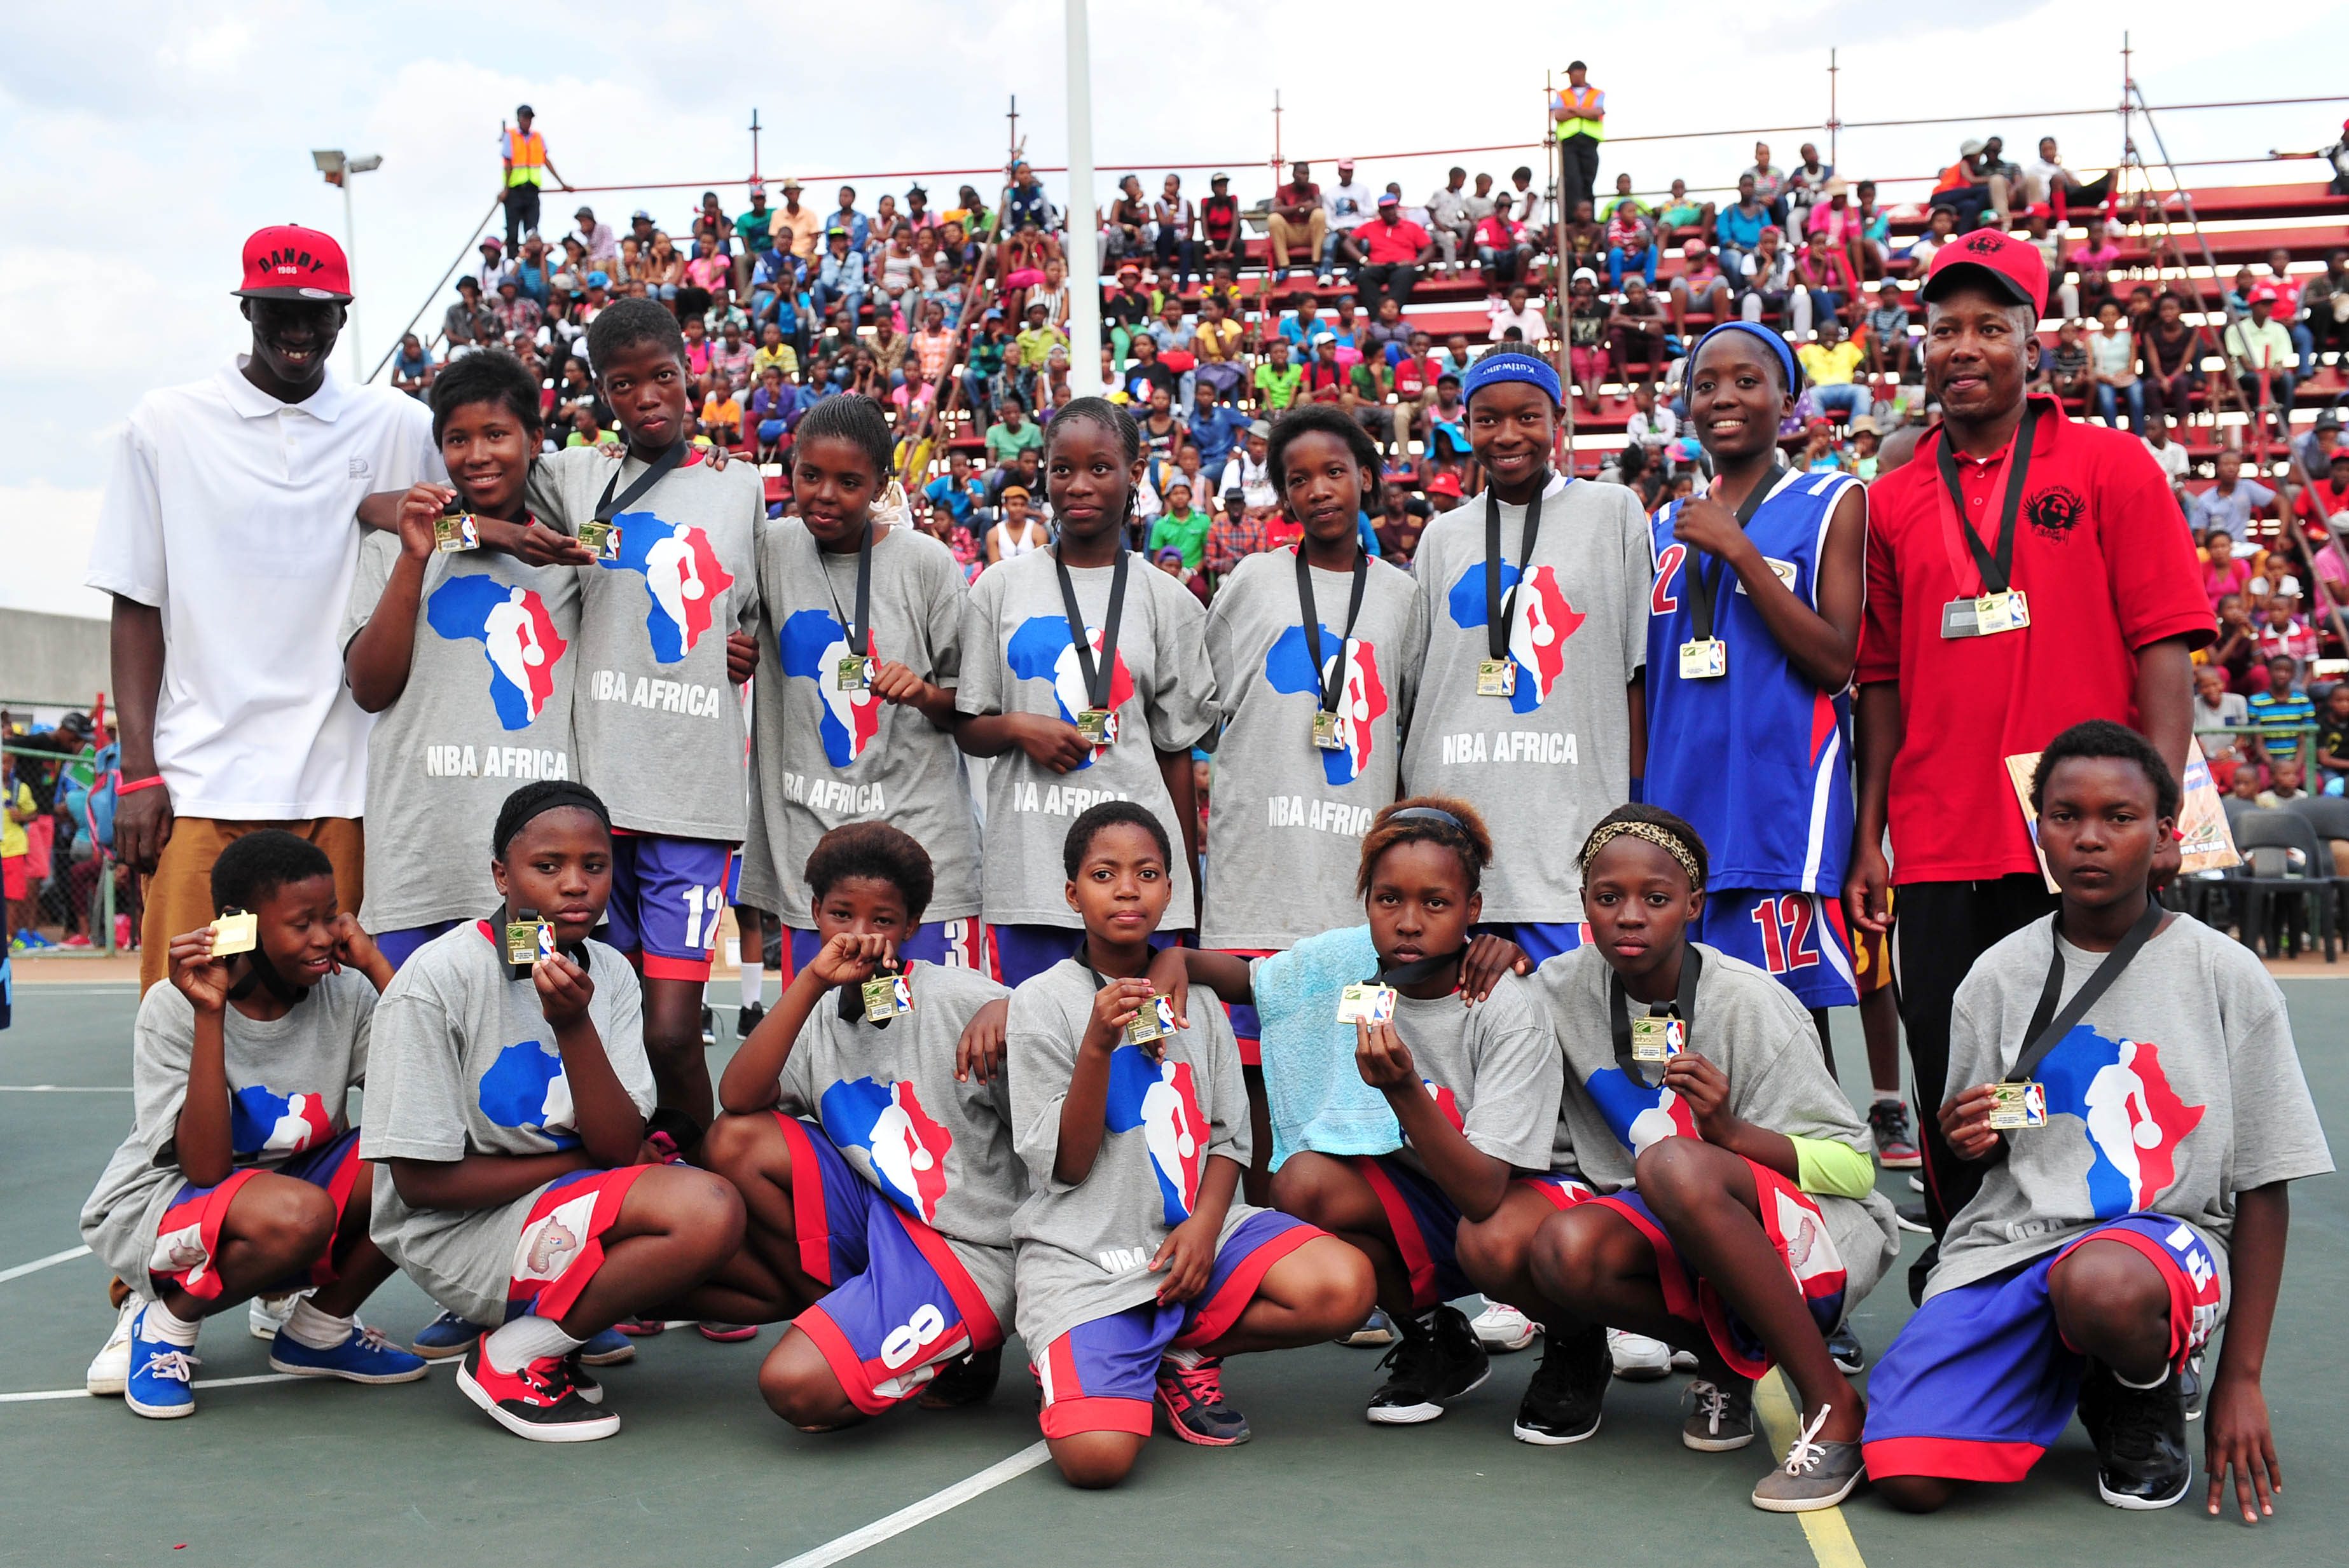 Girls Middle School Champions: Charora Secondary School (Junior Impalas), 25 October 2014